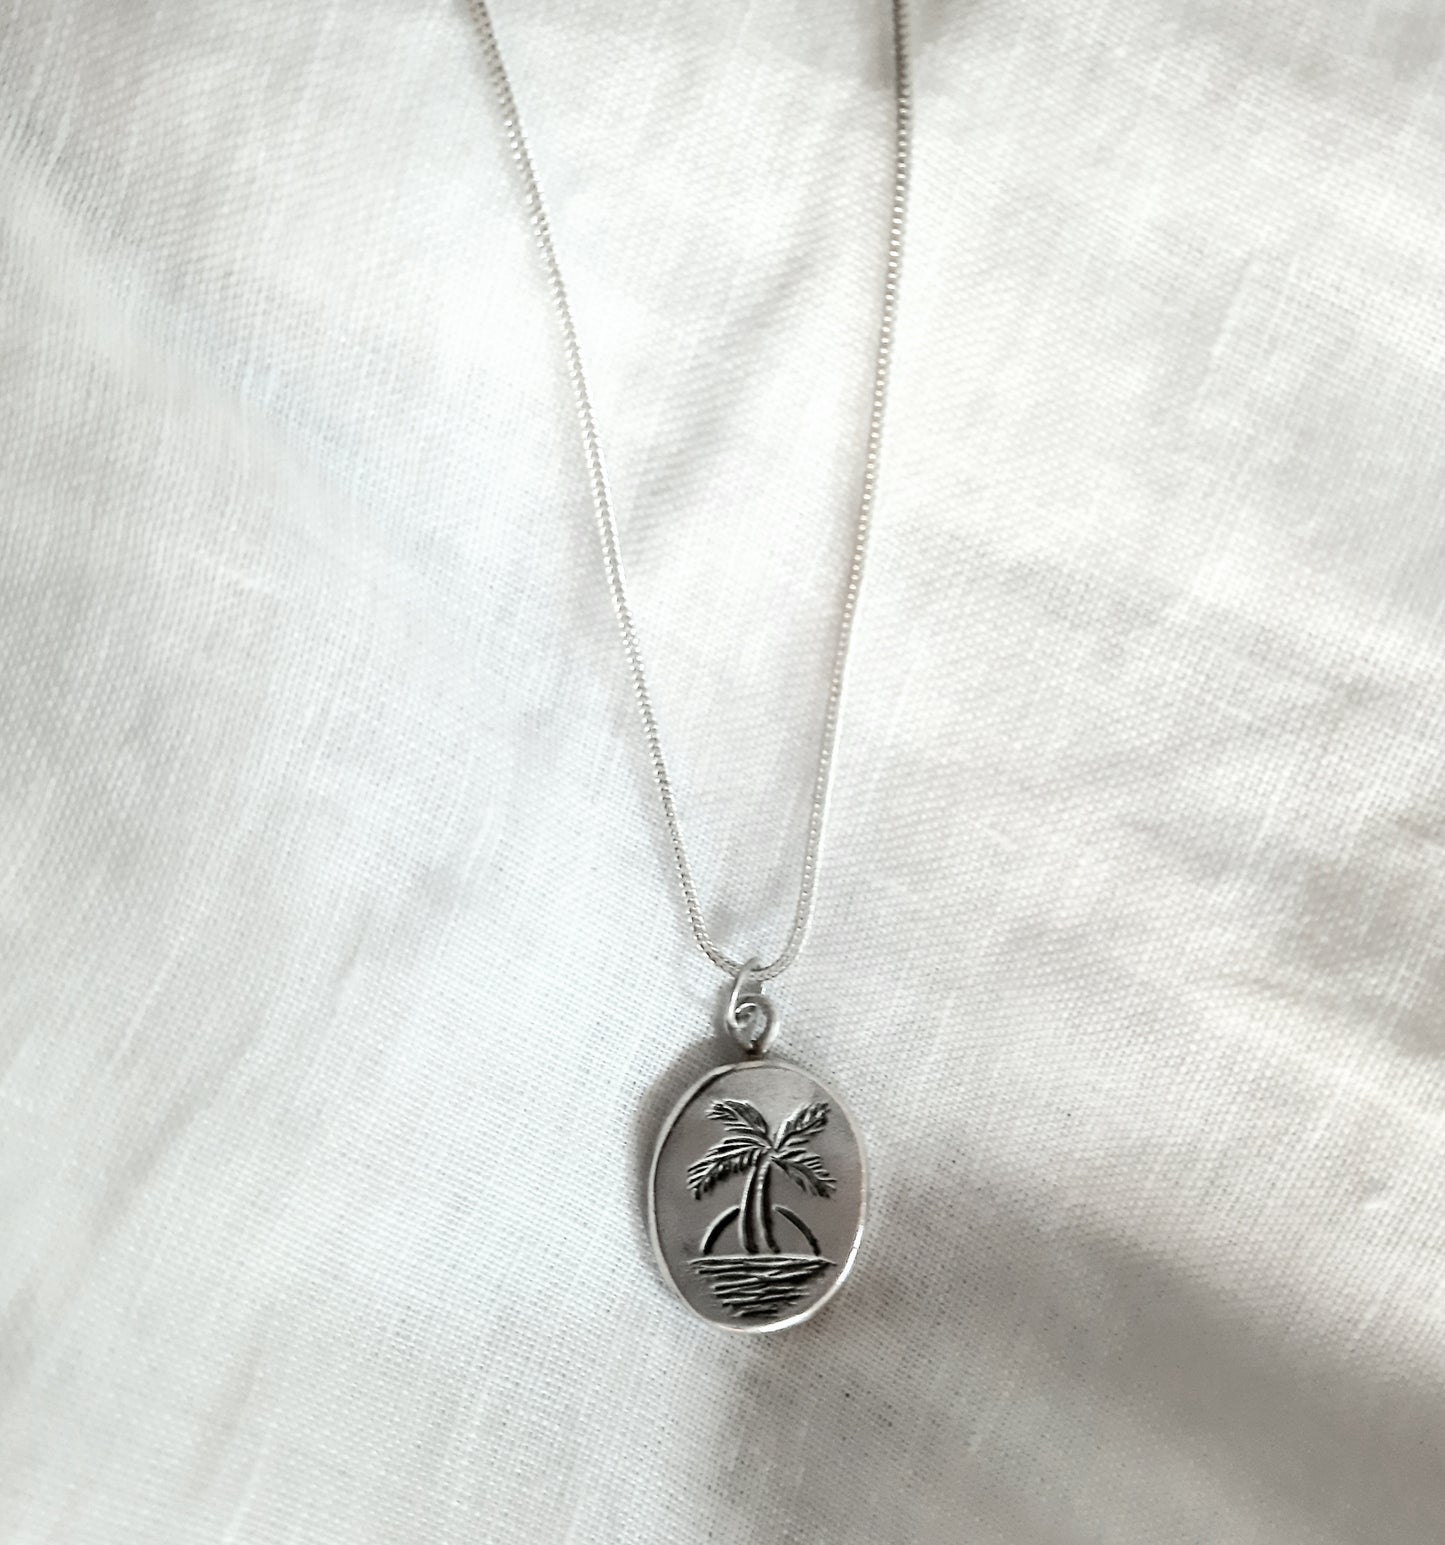 Jewelry for men necklace silver onyx stone design minimal handmade gioielli da uomo collana onice argento artigianale joias para homem prata